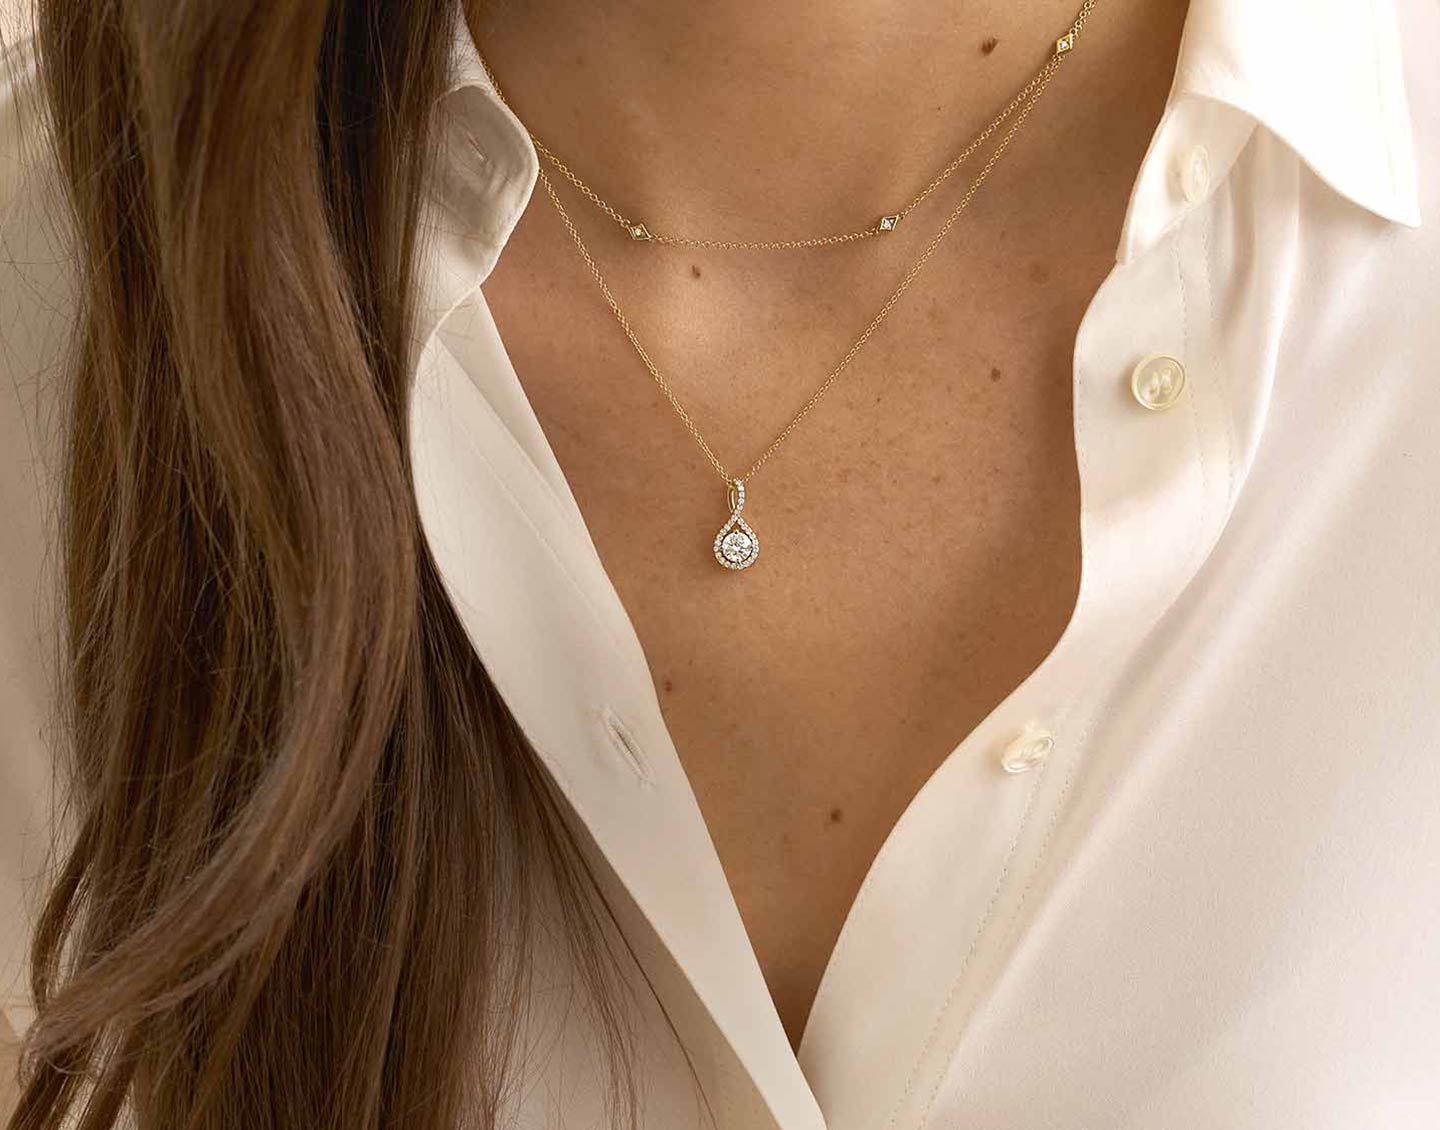 Model wearing CYO diamond necklace